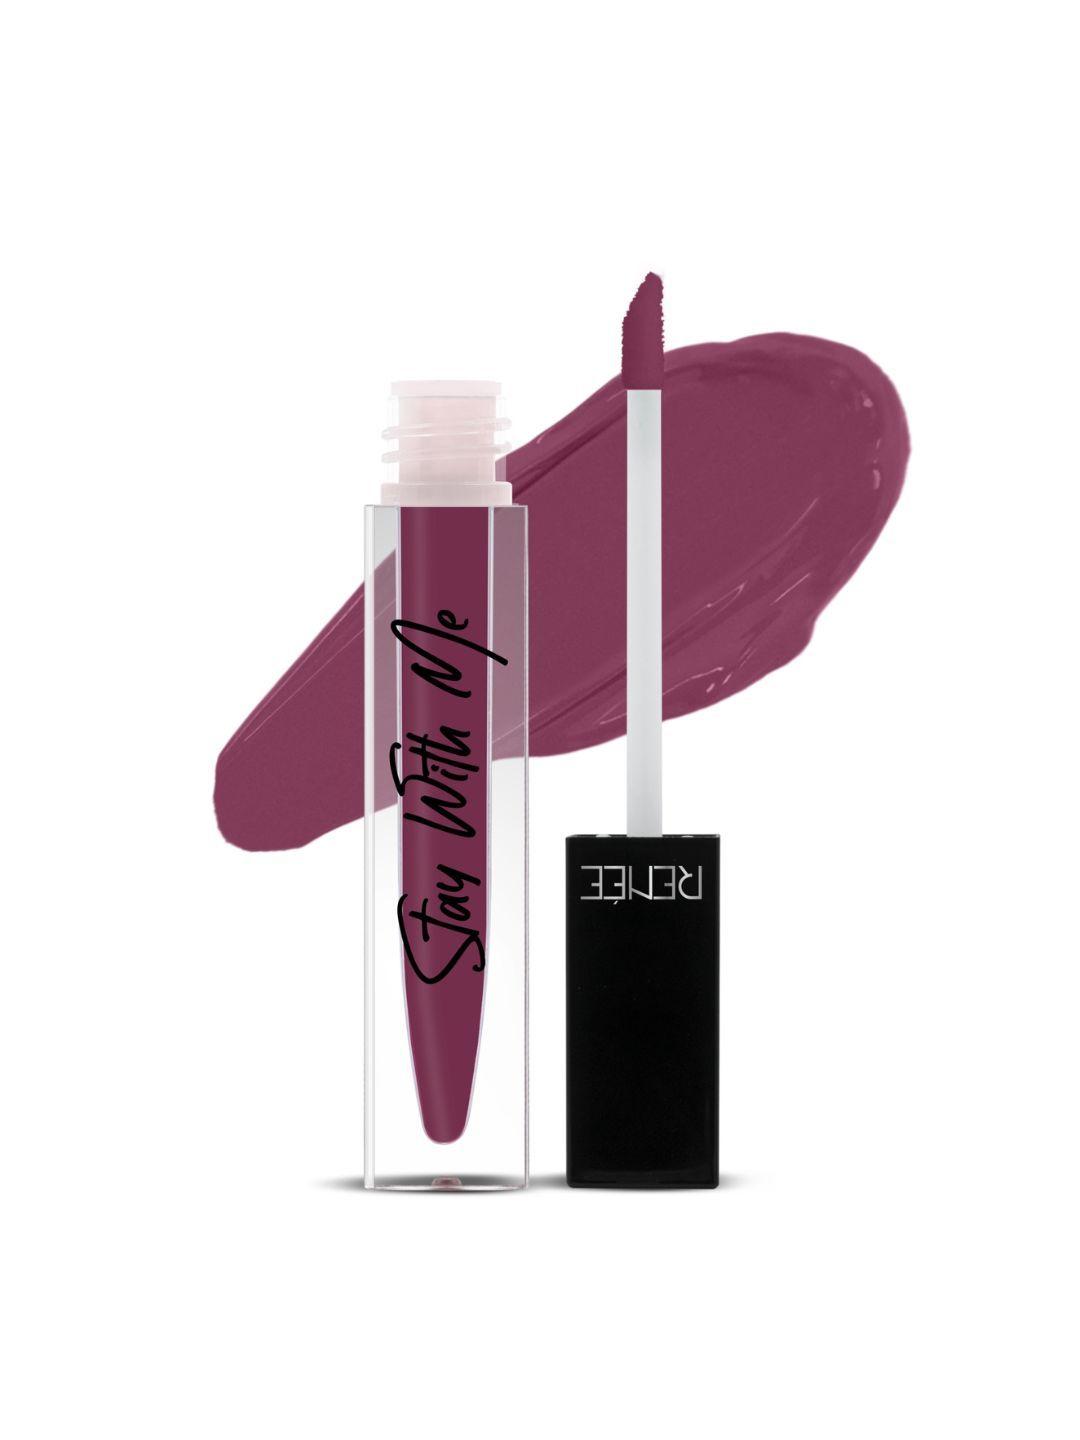 renee purple lipstick stay with me matte lip color - passion for grape, 5ml